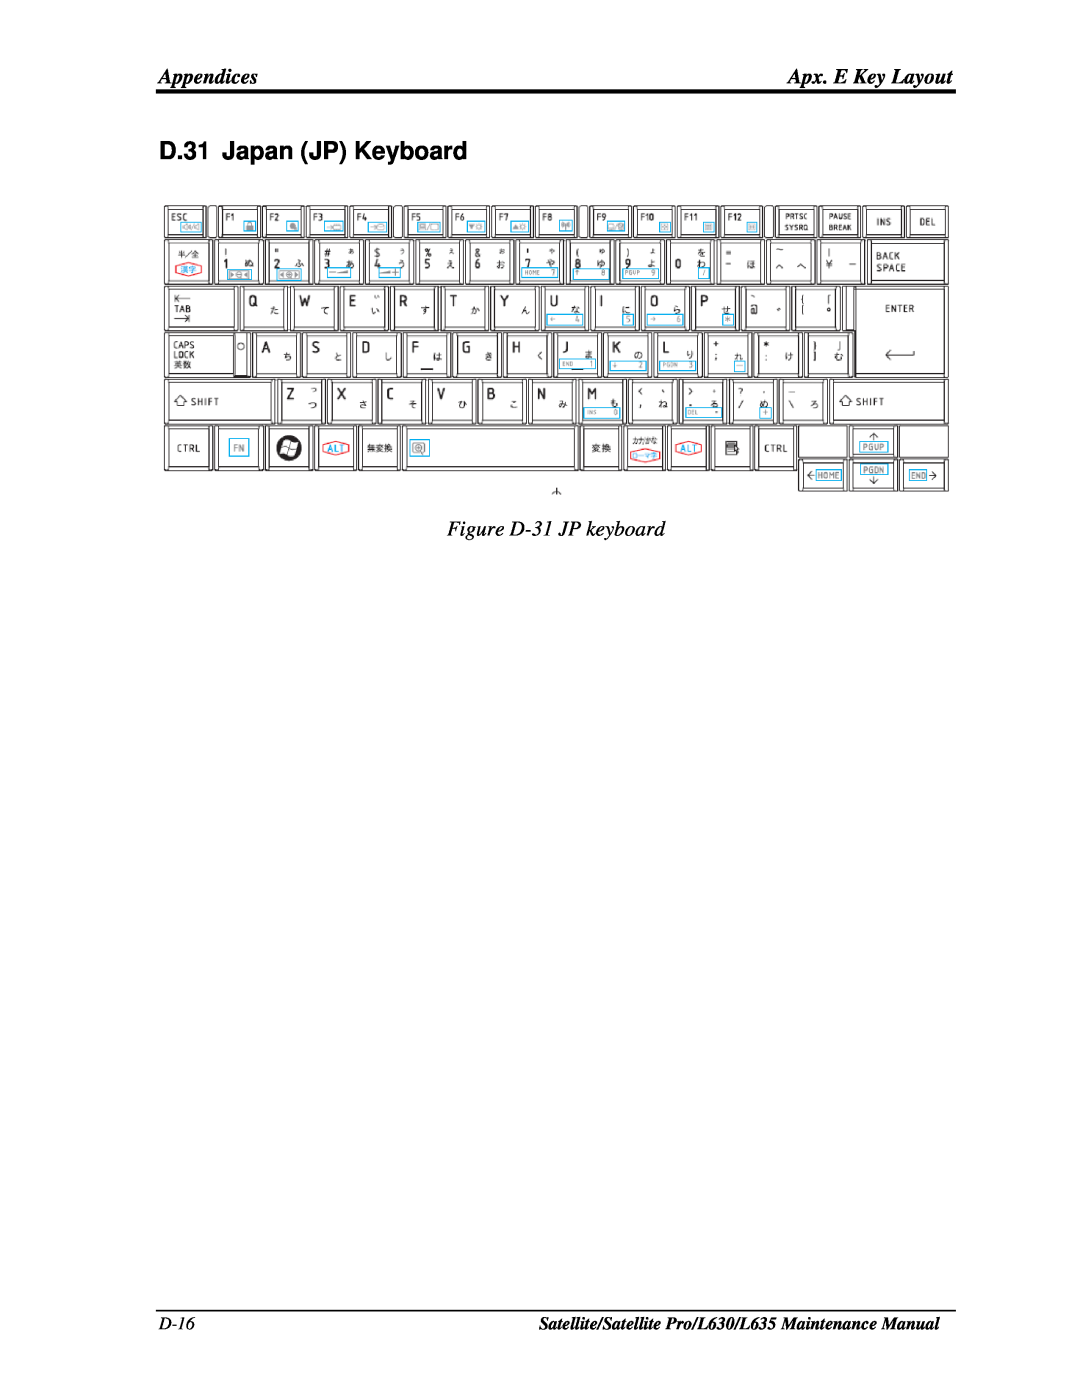 Toshiba D.31 Japan JP Keyboard, Figure D-31 JP keyboard, D-16, Satellite/Satellite Pro/L630/L635 Maintenance Manual 